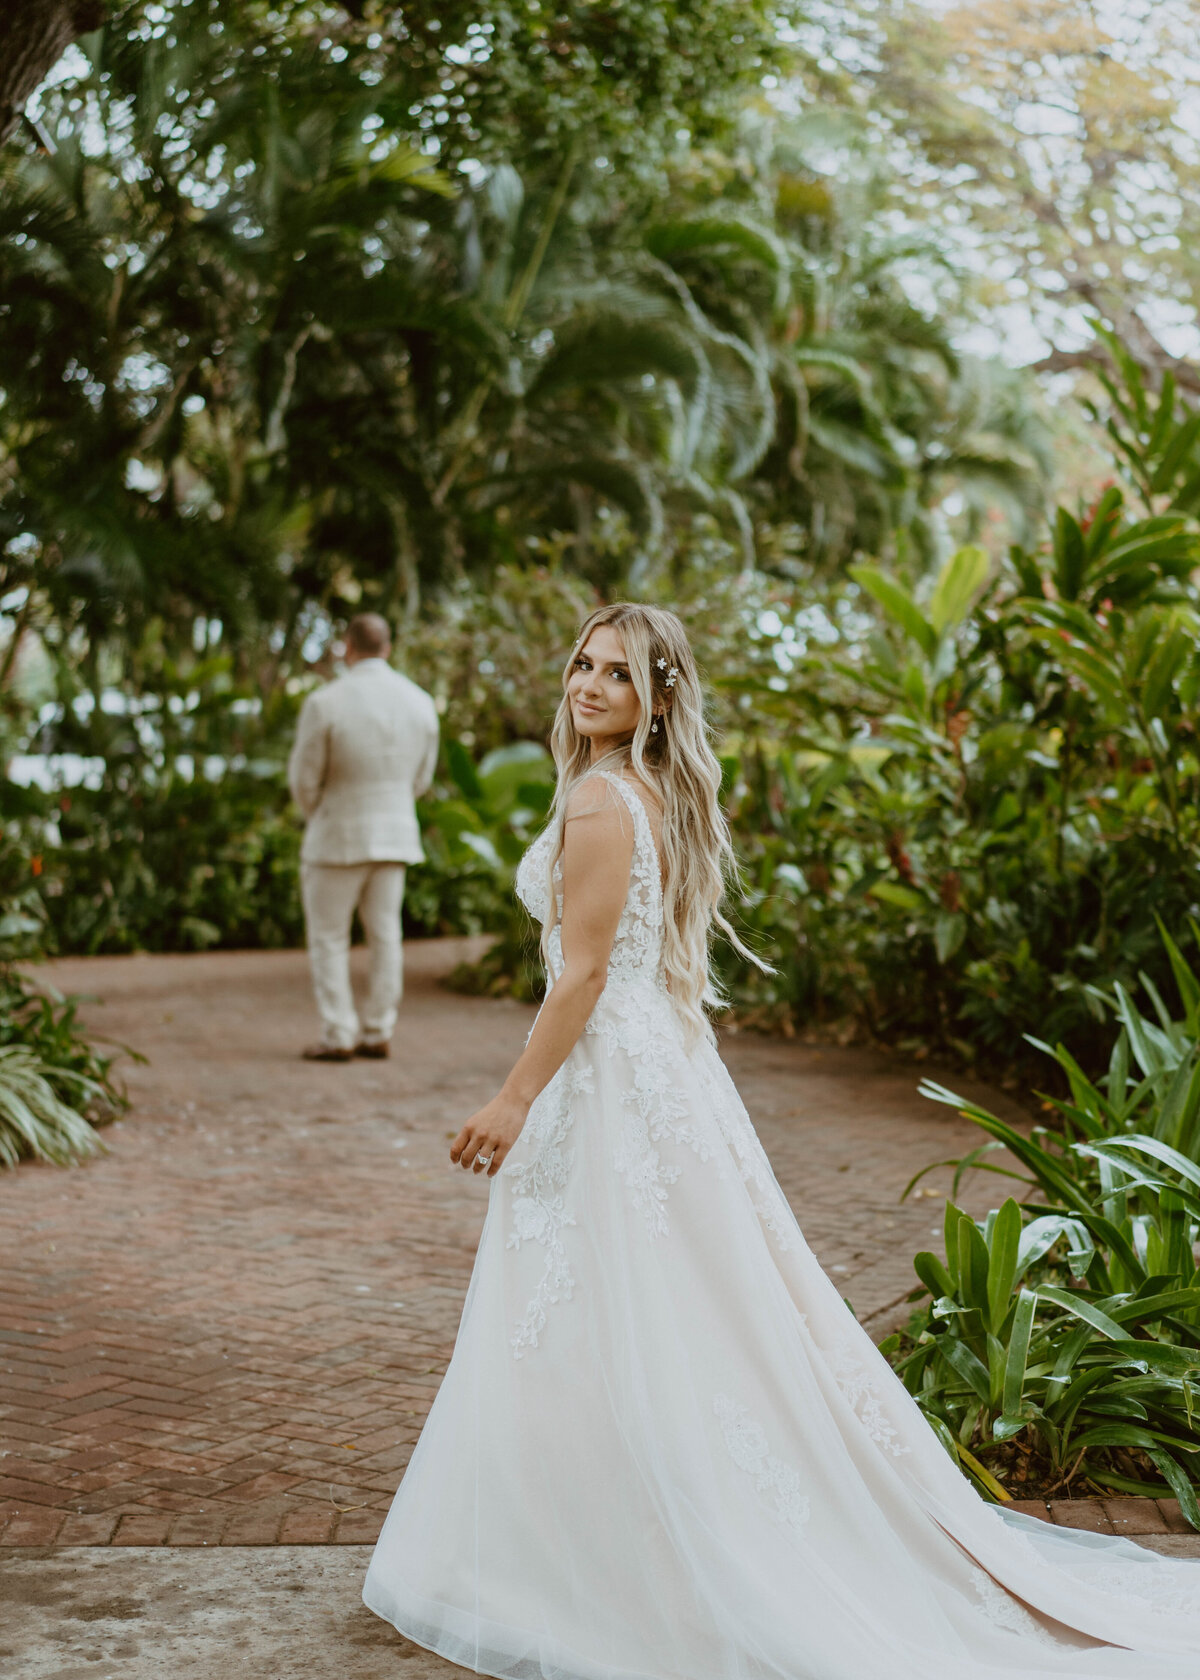 Cass and Alex got married at Olowalu Plantation House on Maui.